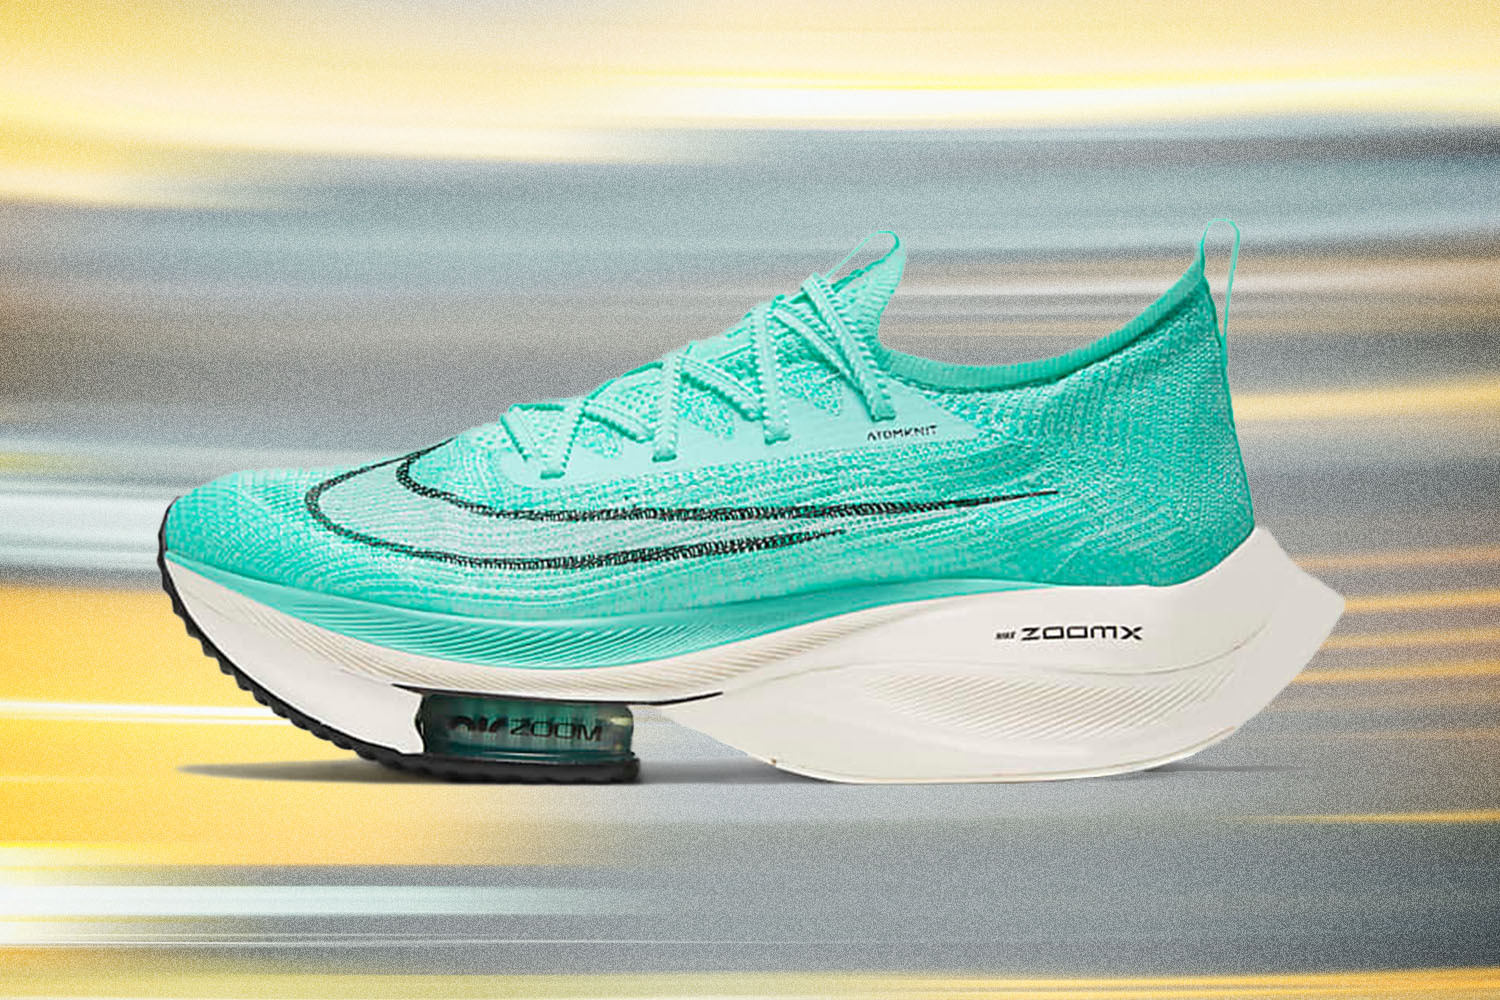 What's inside Nike's Fastest Running Shoe? 